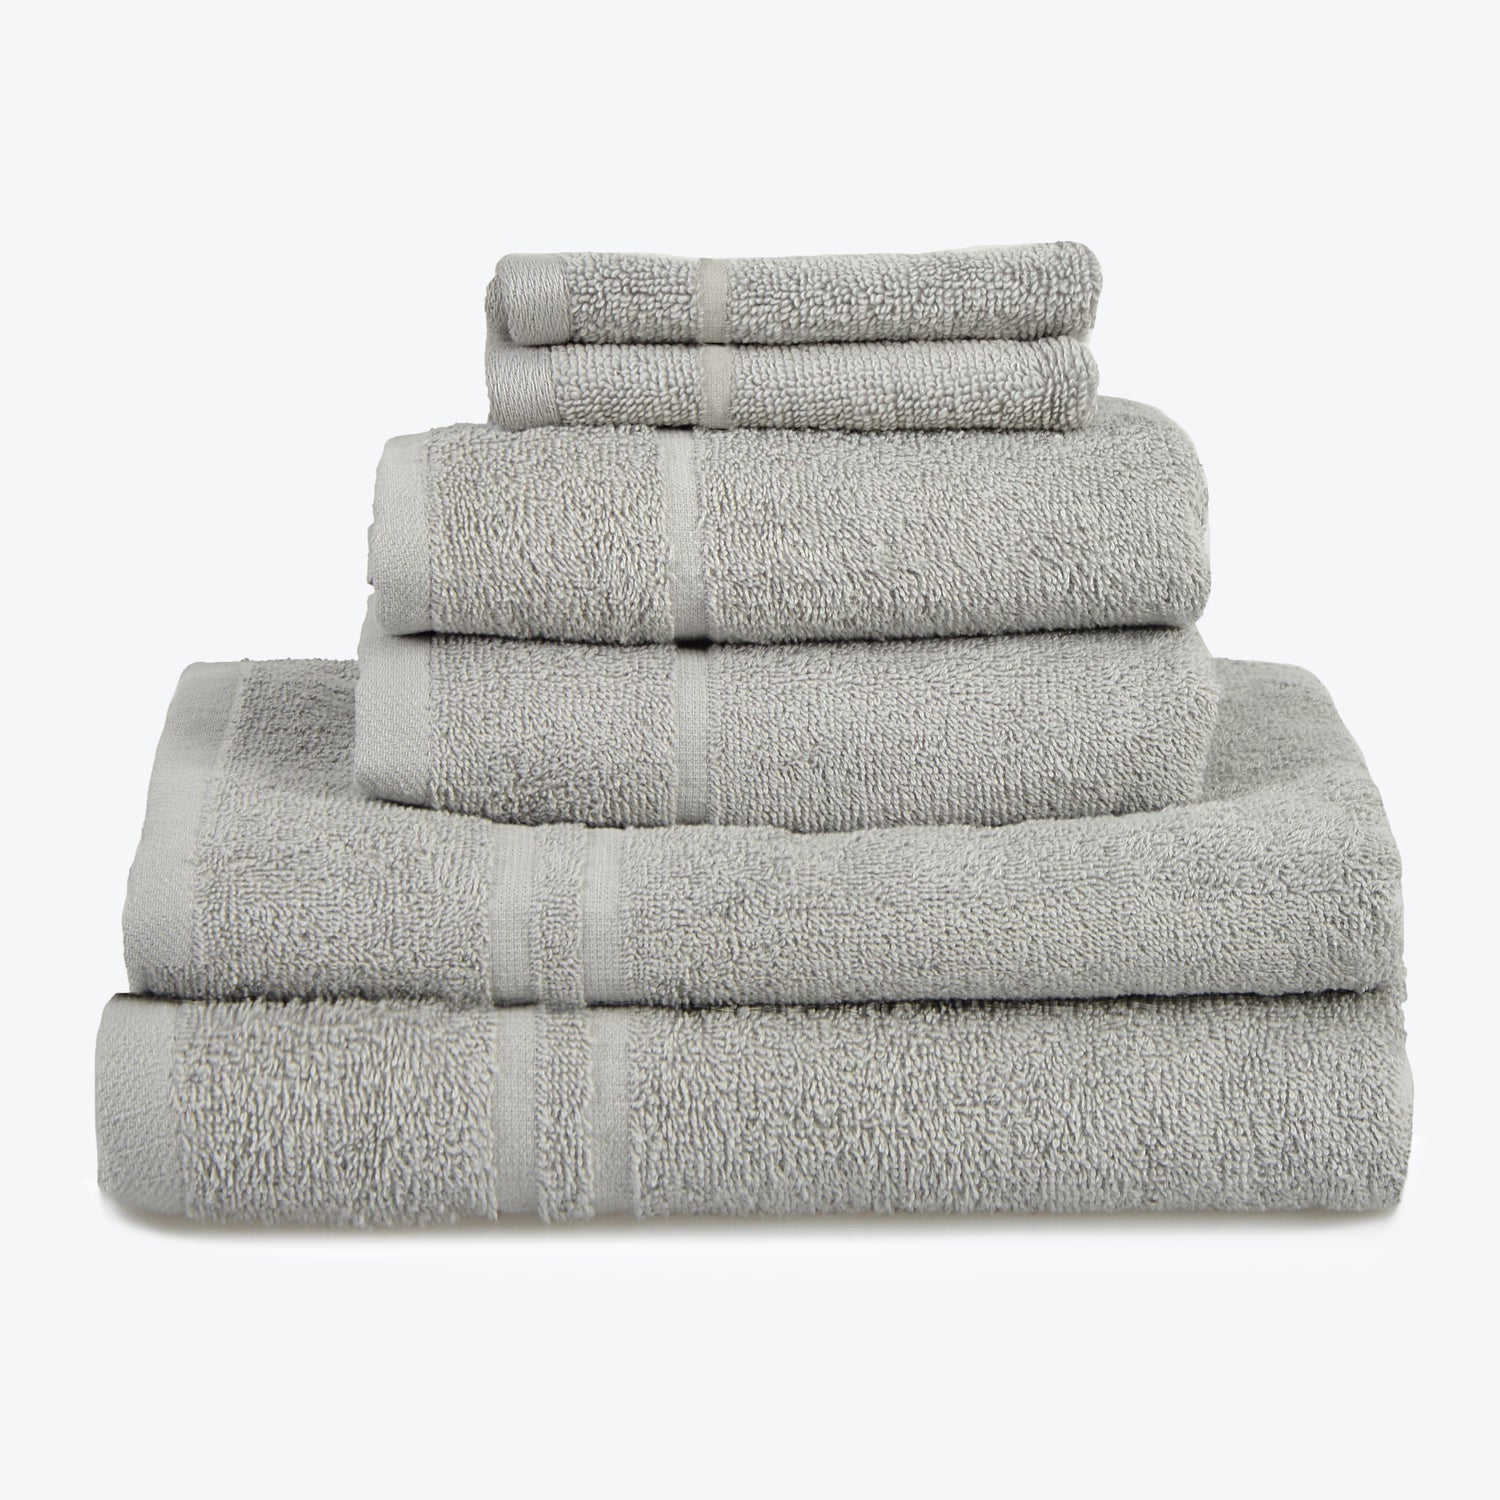 Hotel Quality Towel Bale - Silver Grey 6pc Towel Set